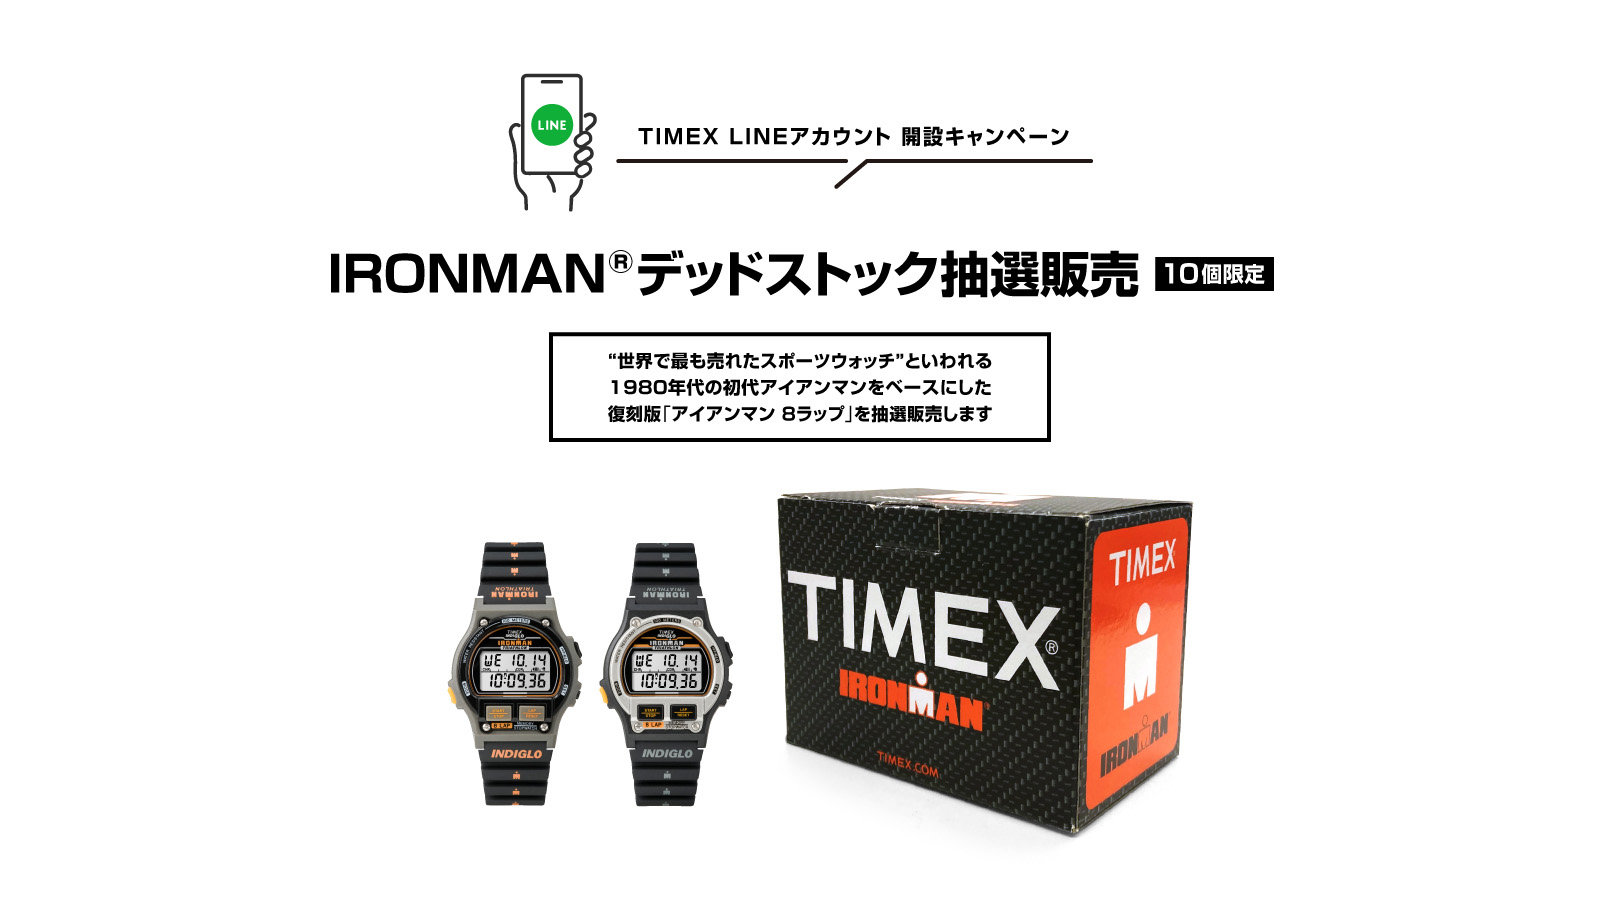 TIMEX】復刻版の貴重な「アイアンマン8ラップ」が20本限定で抽選販売を 